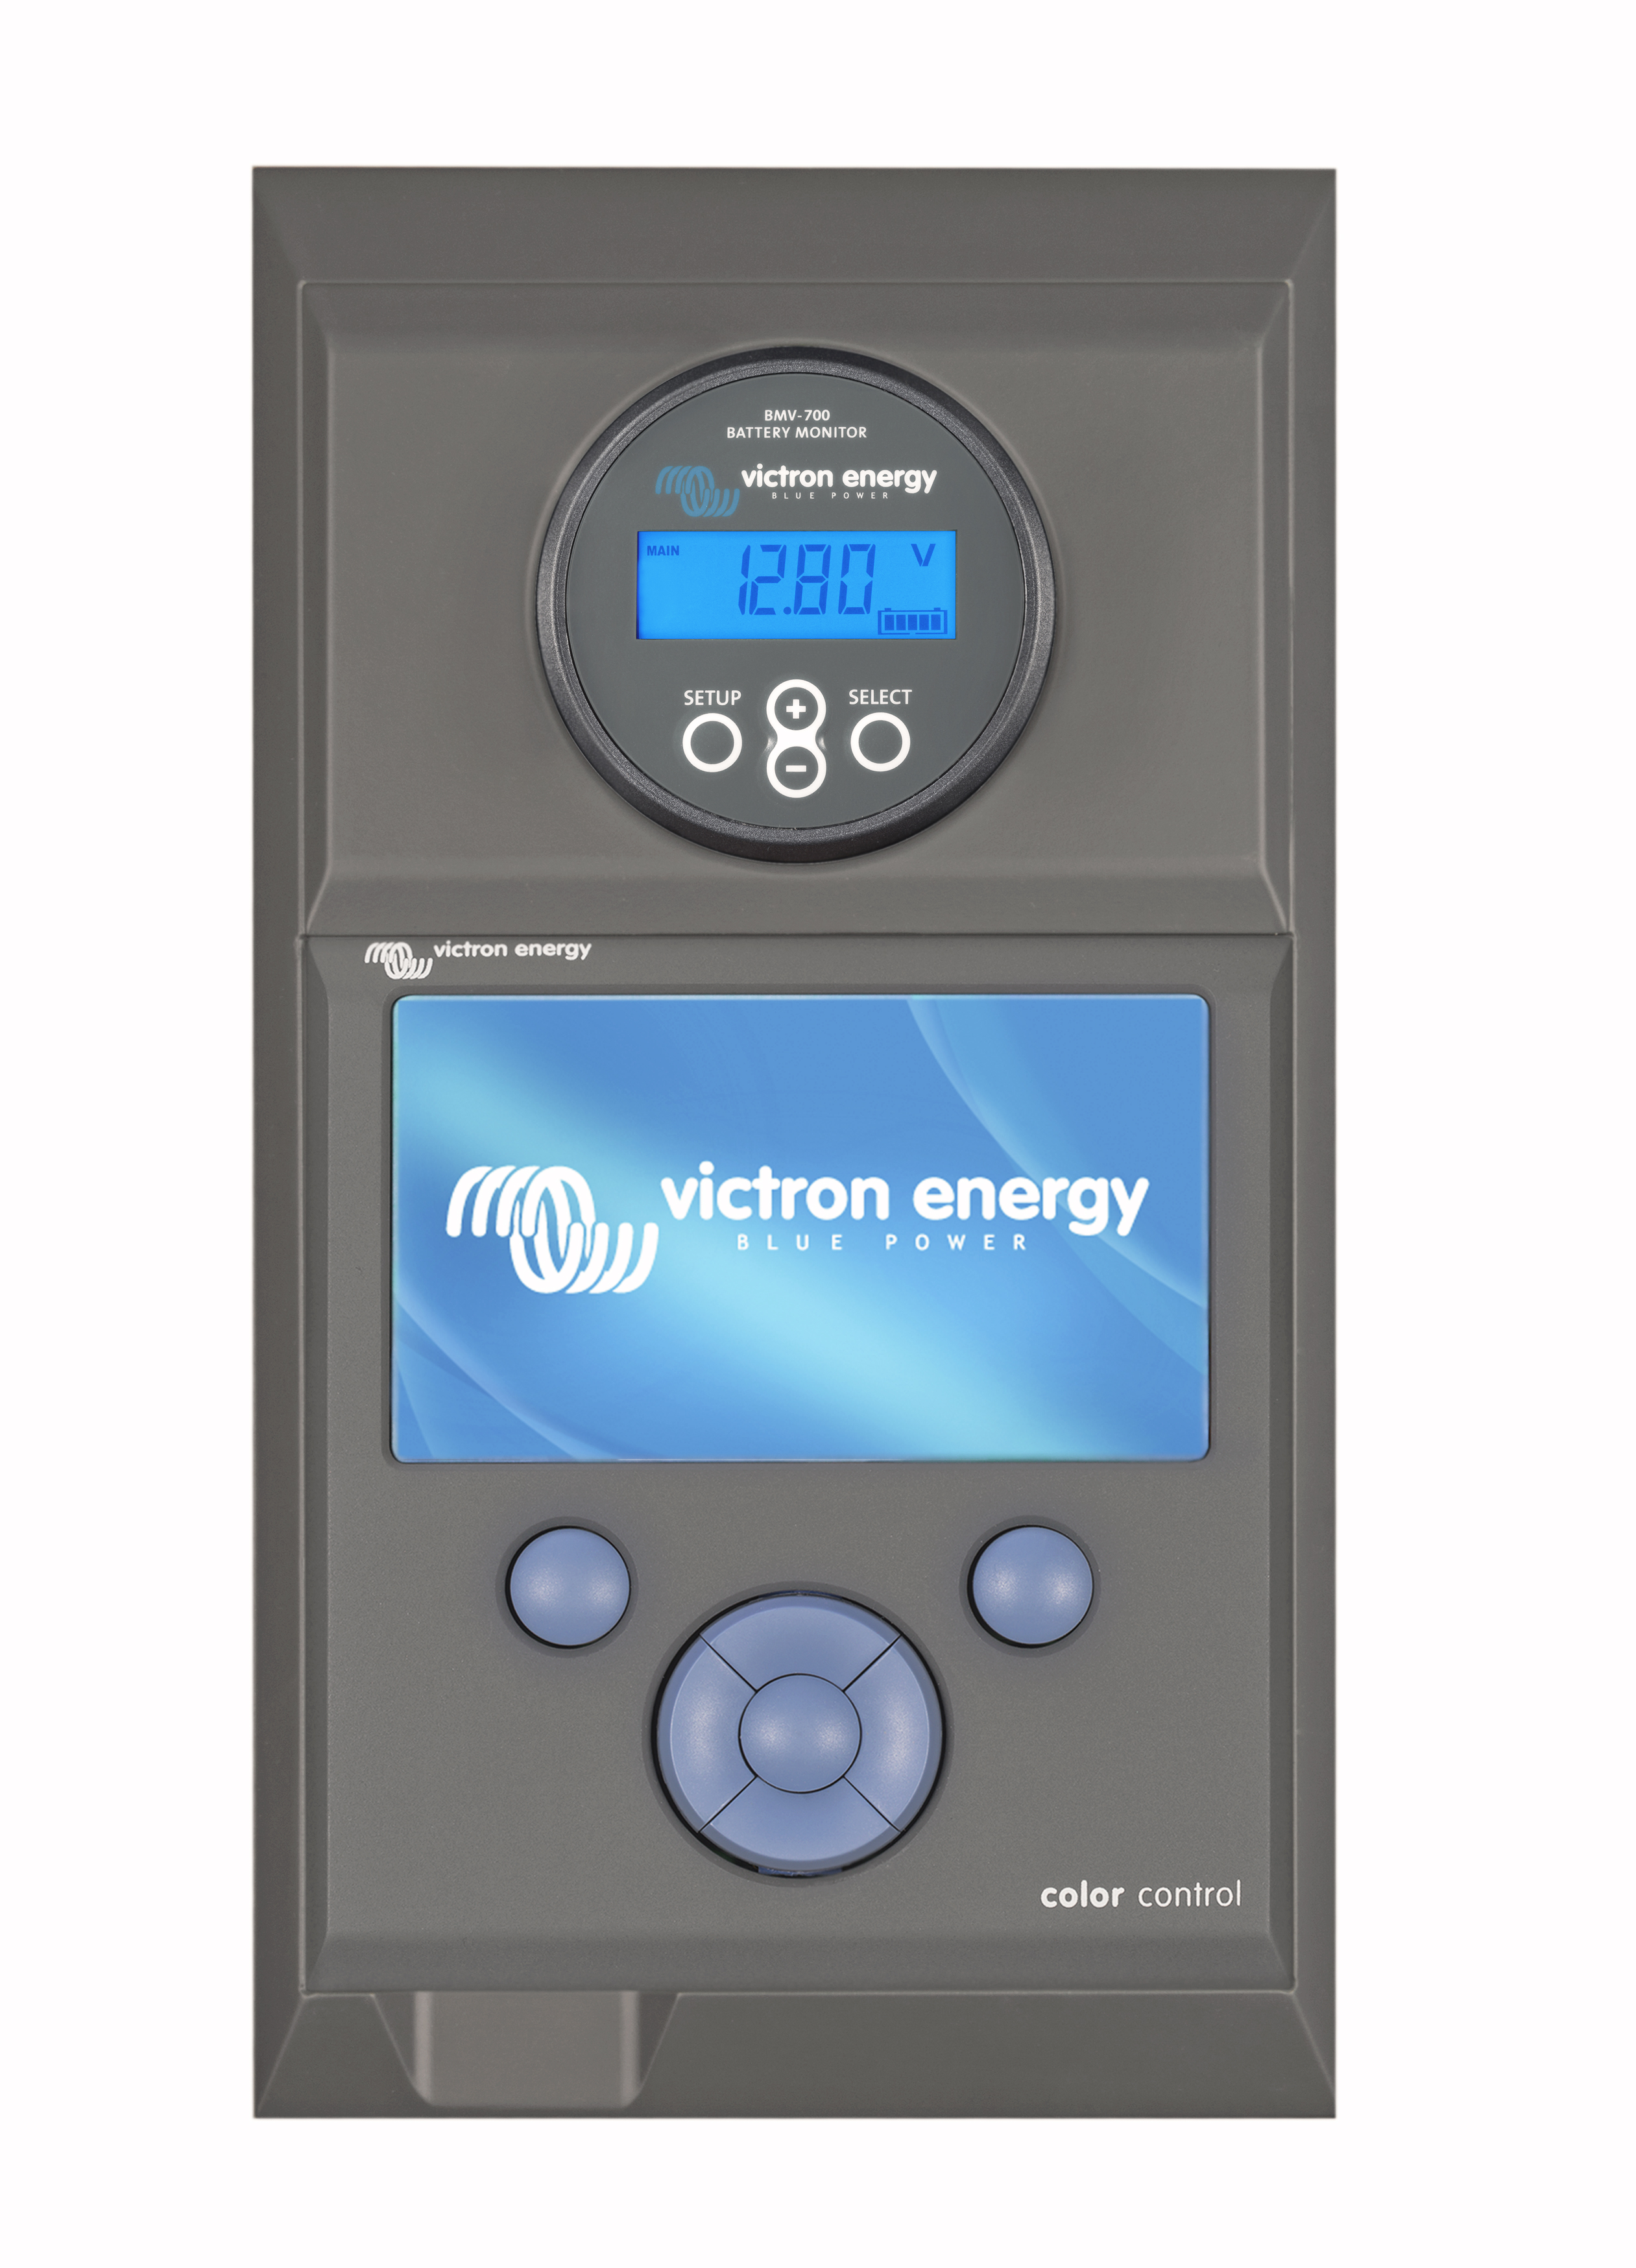 BMV-702 - Victron Energy